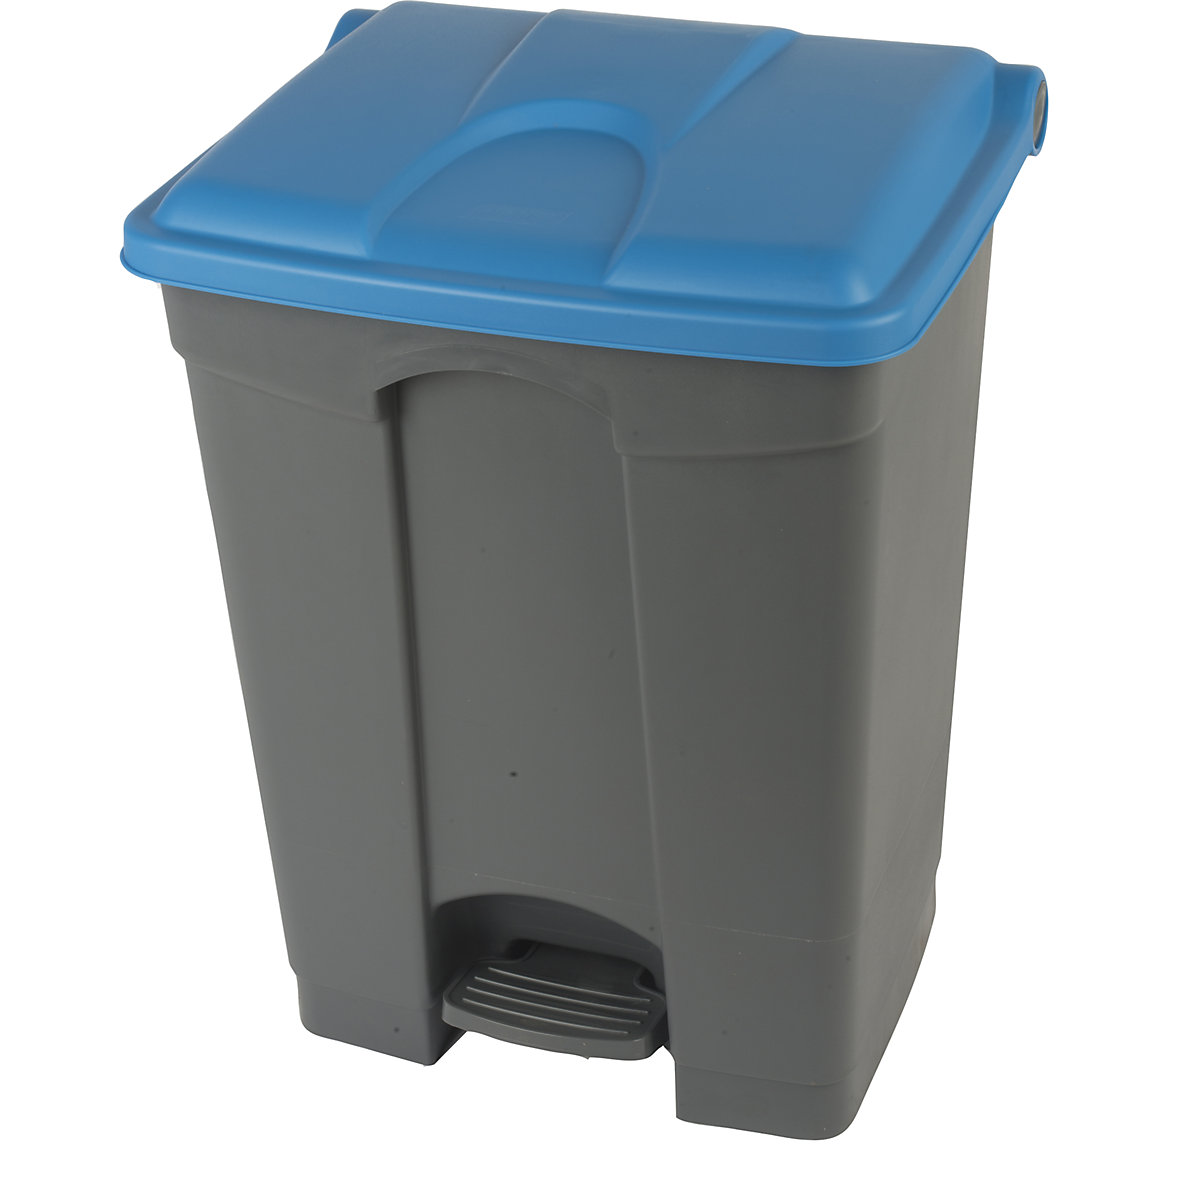 EUROKRAFTbasic – Pedal waste collector, capacity 70 l, WxHxD 505 x 675 x 415 mm, grey, blue lid